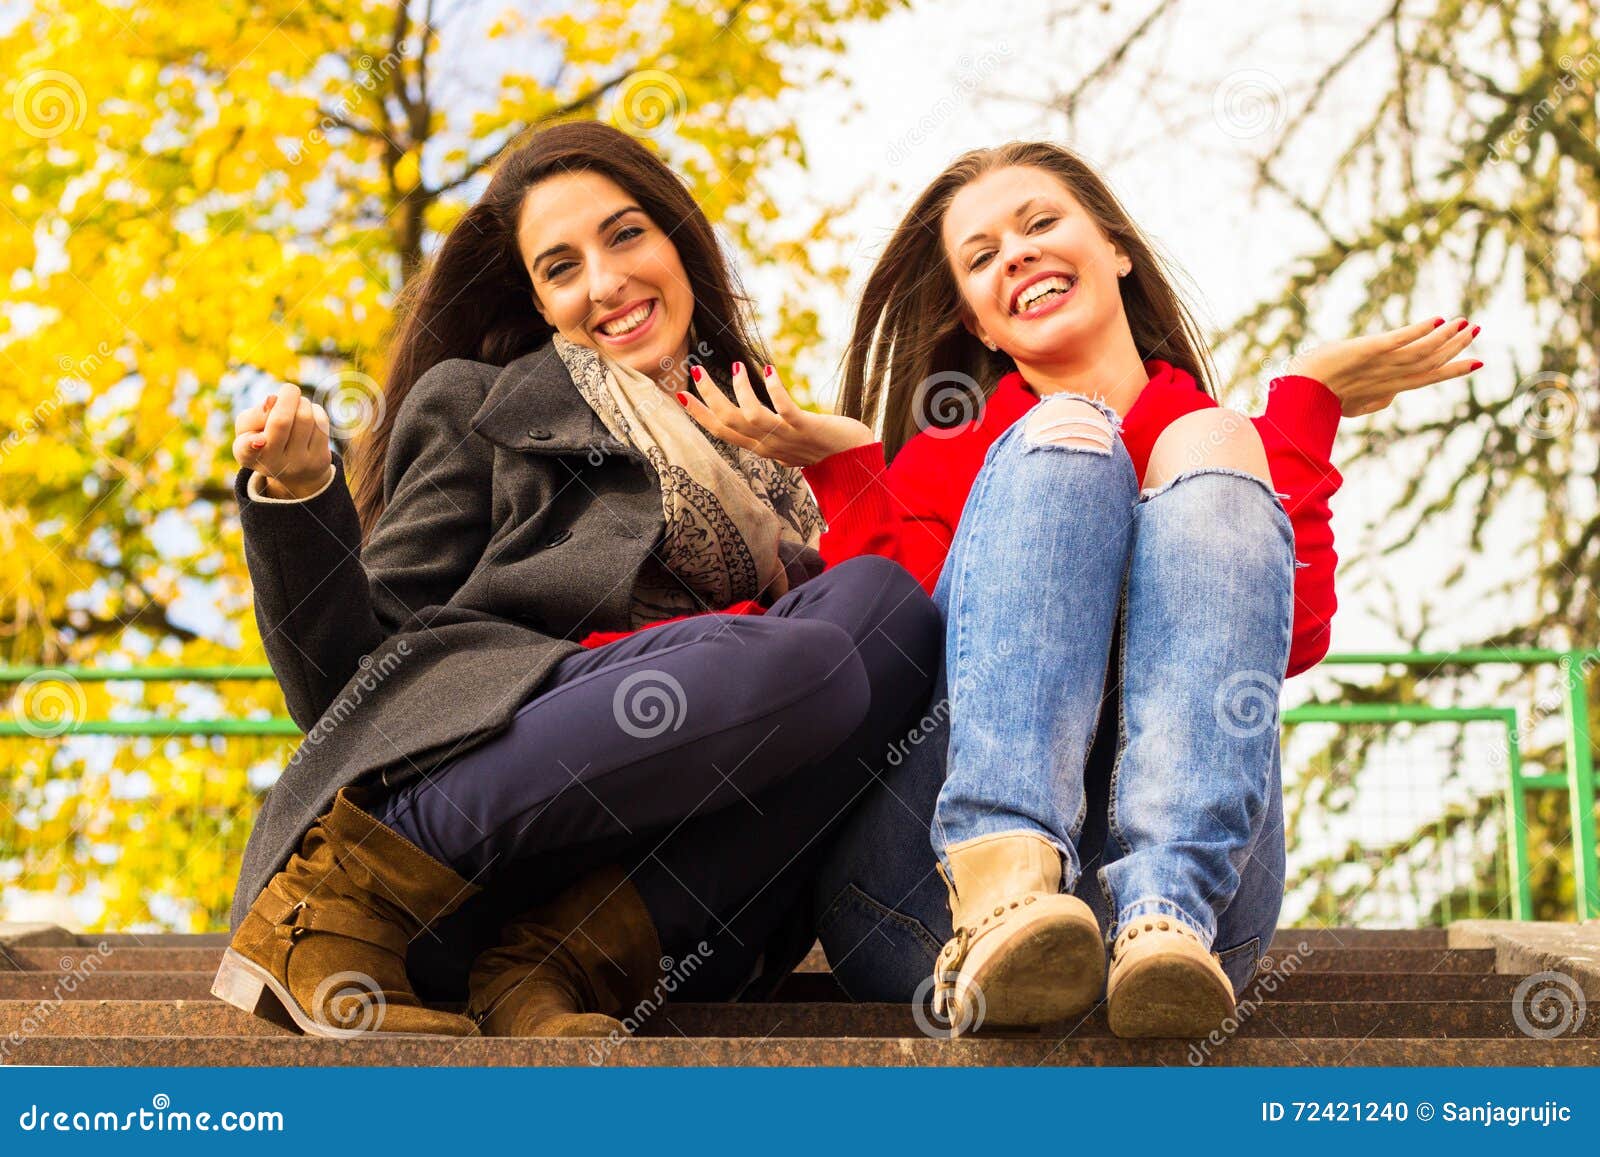 Two girls having fun stock photo. Image of girlfriends - 72421240